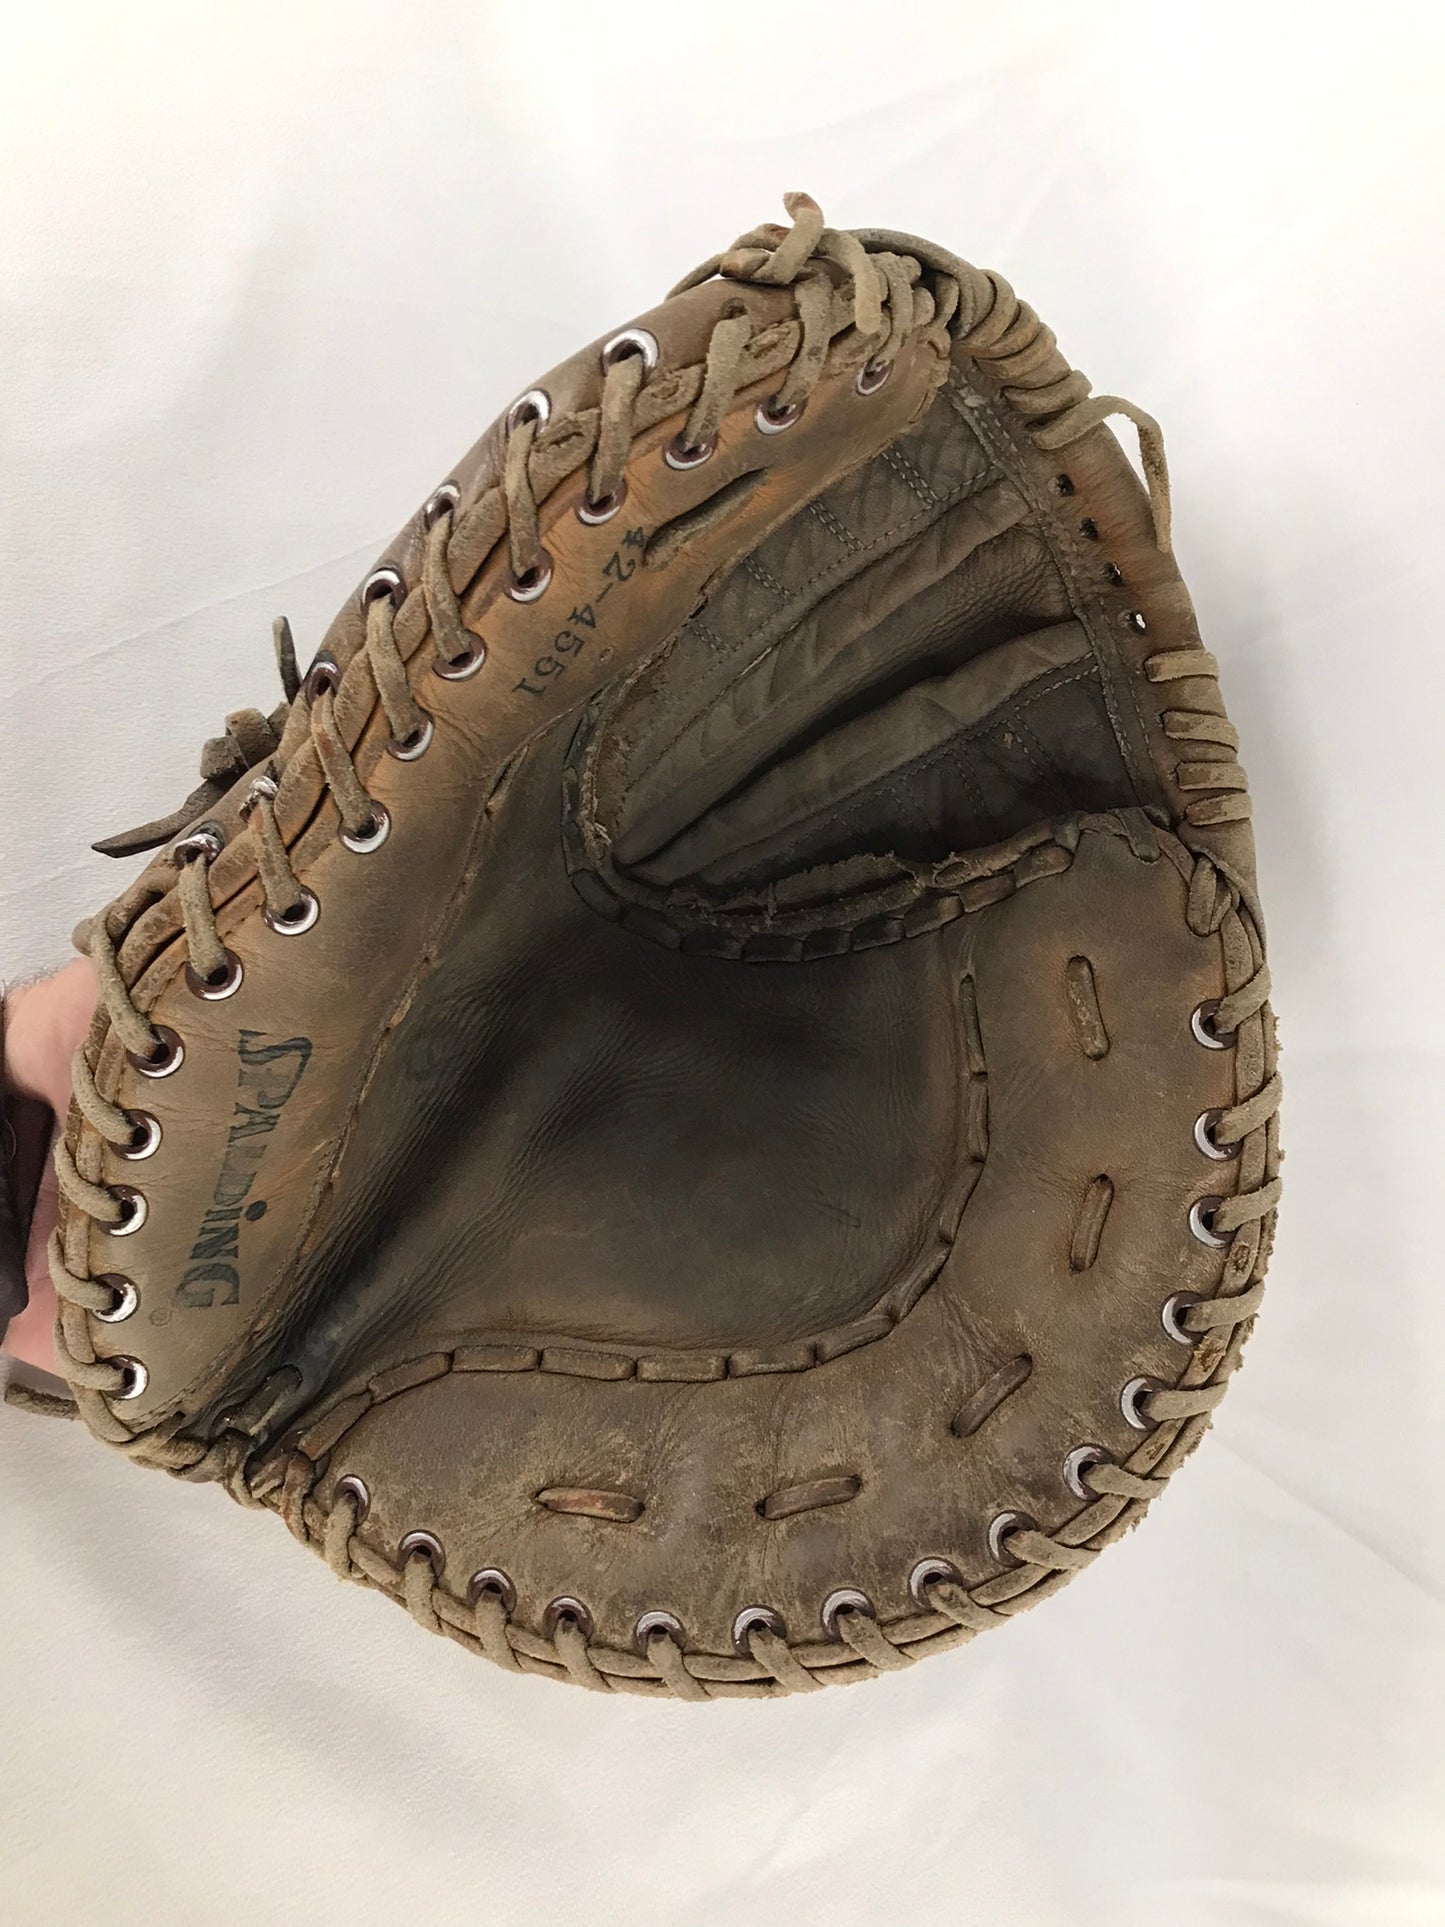 Baseball Glove Adult Size 12 inch First Basemen Spalding Vintage Soft Tan Leather Fits on Left Hand